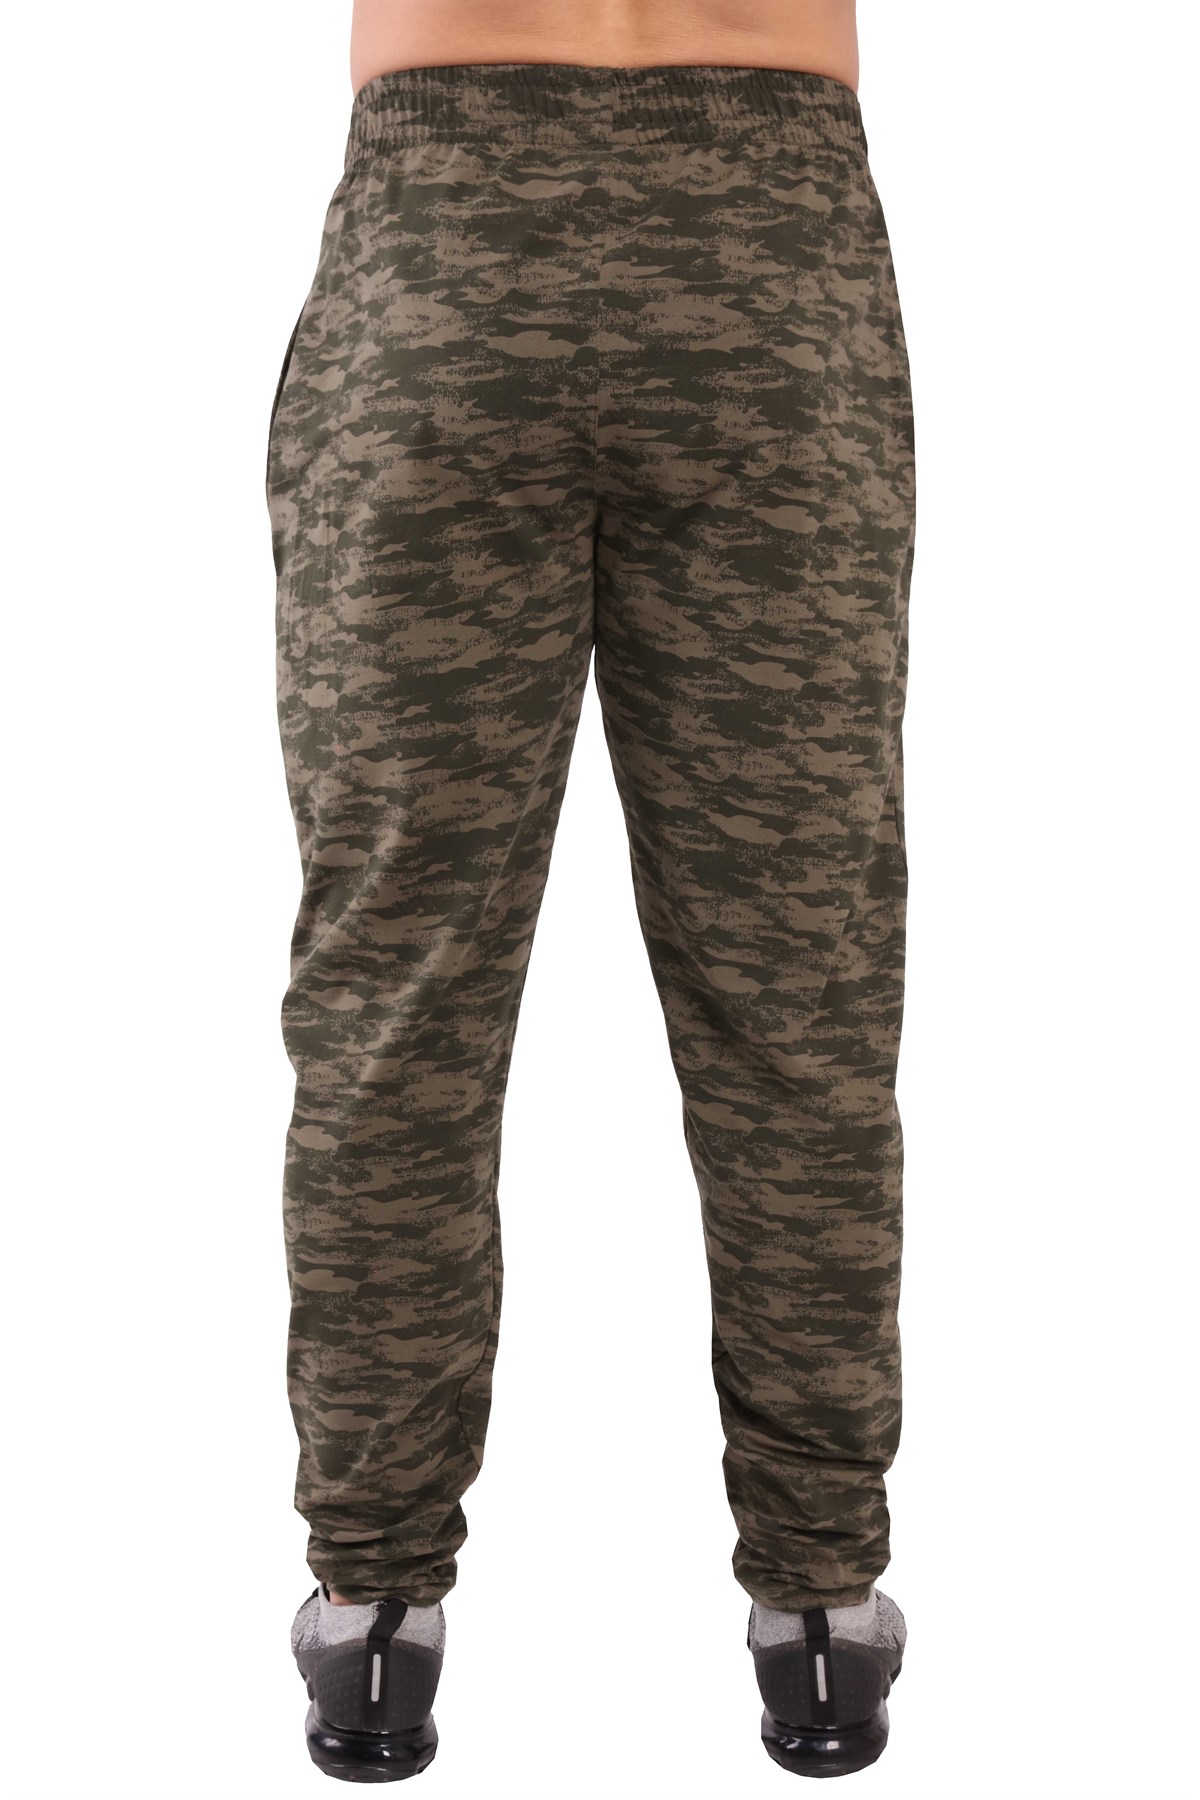 Men's Camouflage Baggy Lifestyle Gym Workout Pants | bigsam.com